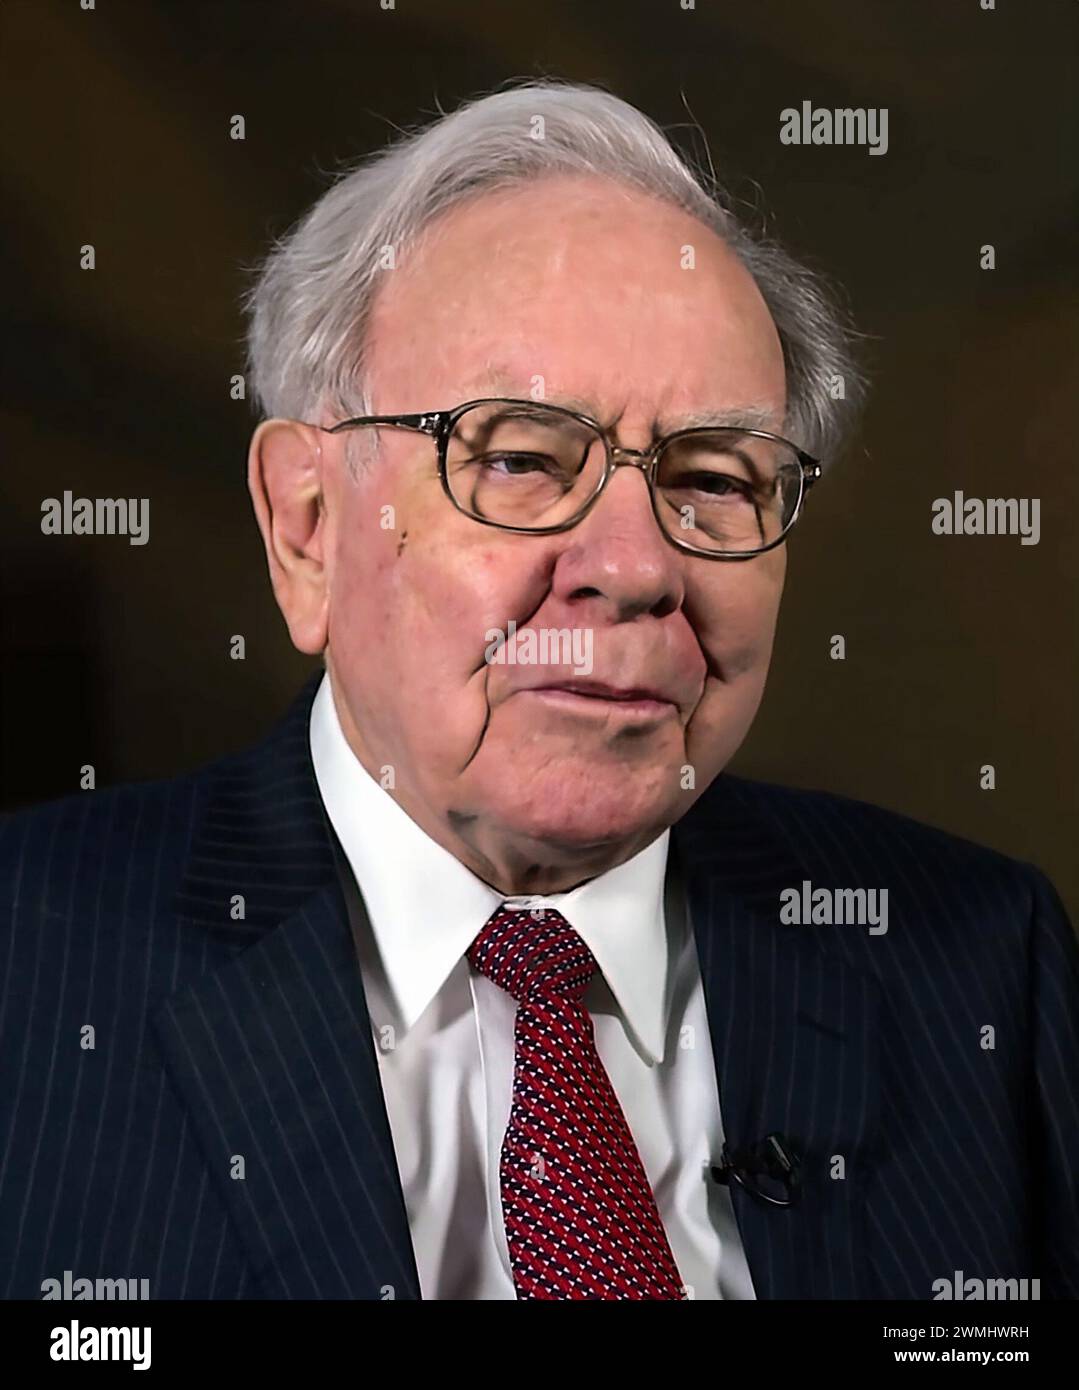 Warren Buffet. Portrait of the American businessman and investor, Warren Edward Buffett (b. 1930) in 2015 Stock Photo